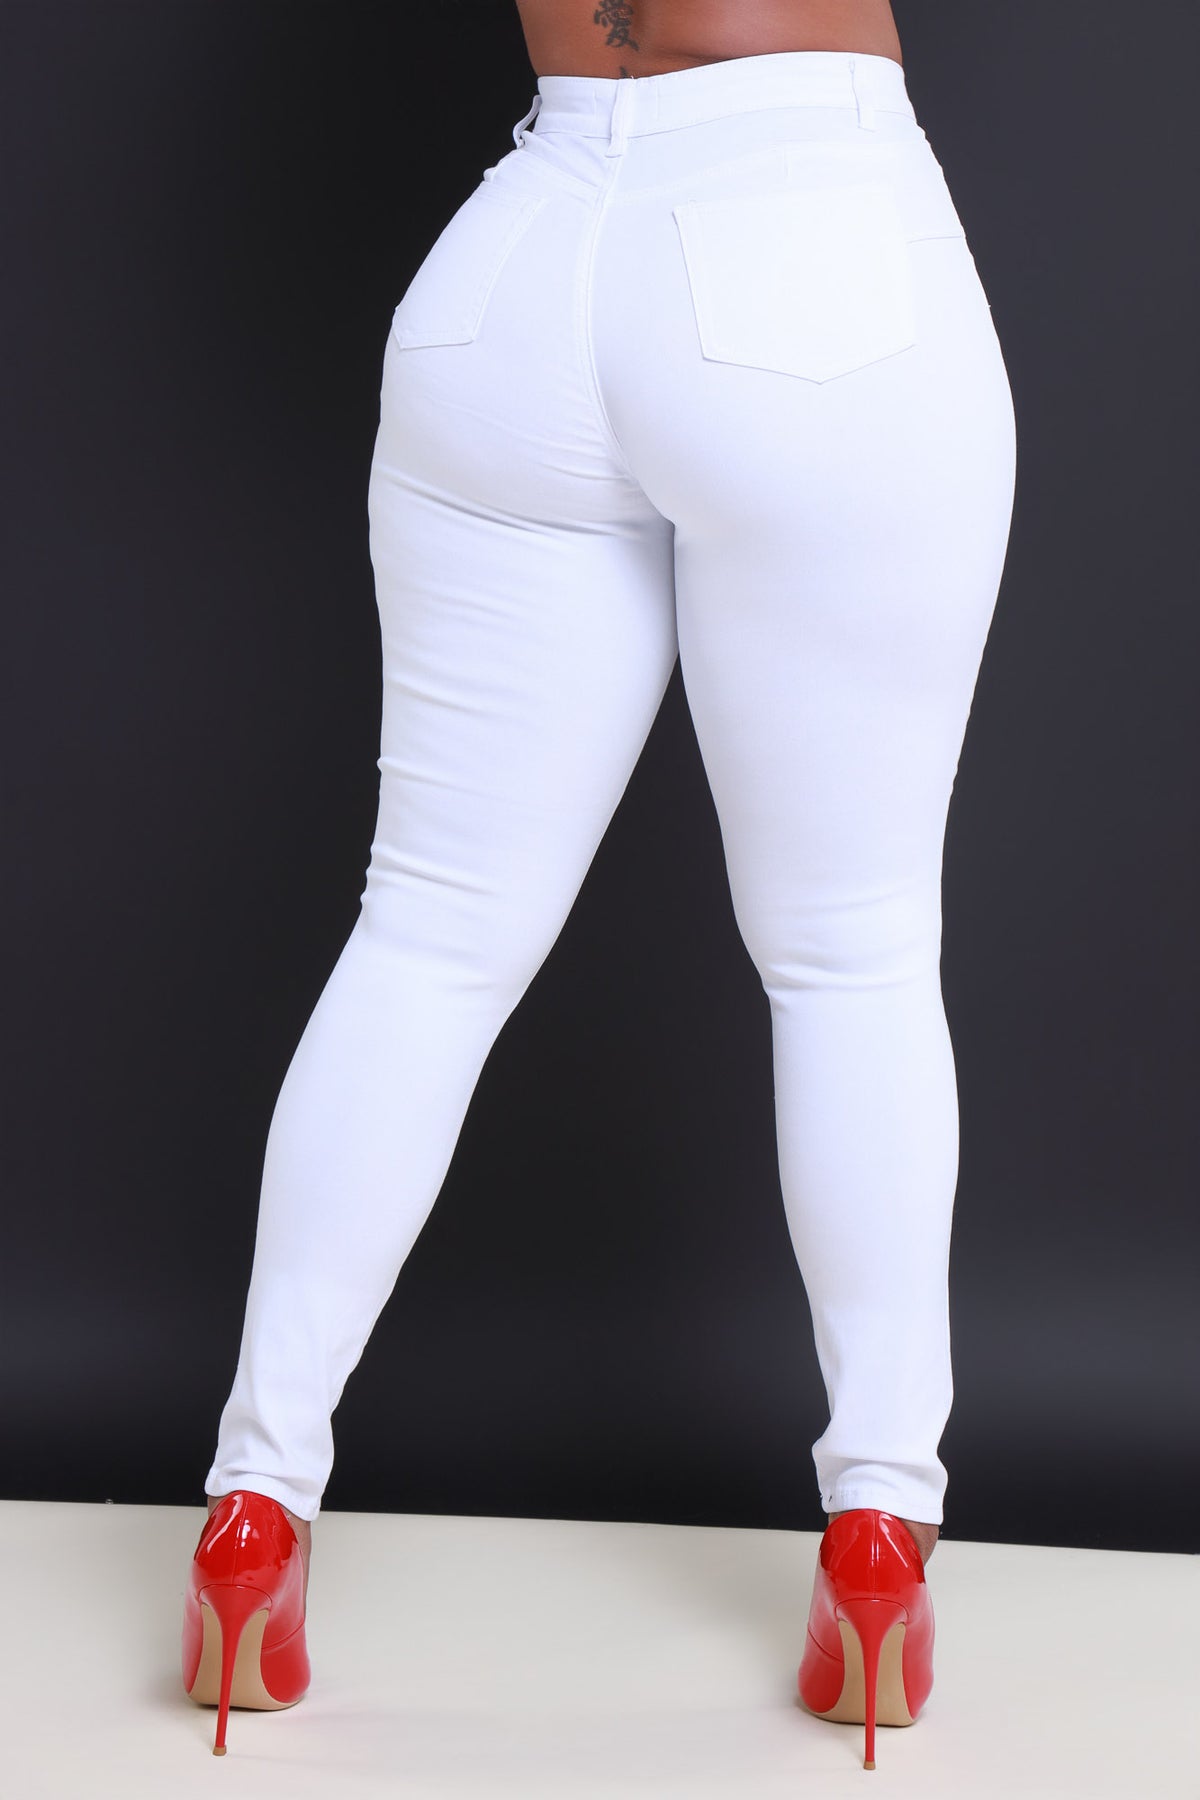 Better-Booty White Butt-Lifting Jeans by Bon Bon Up 5712